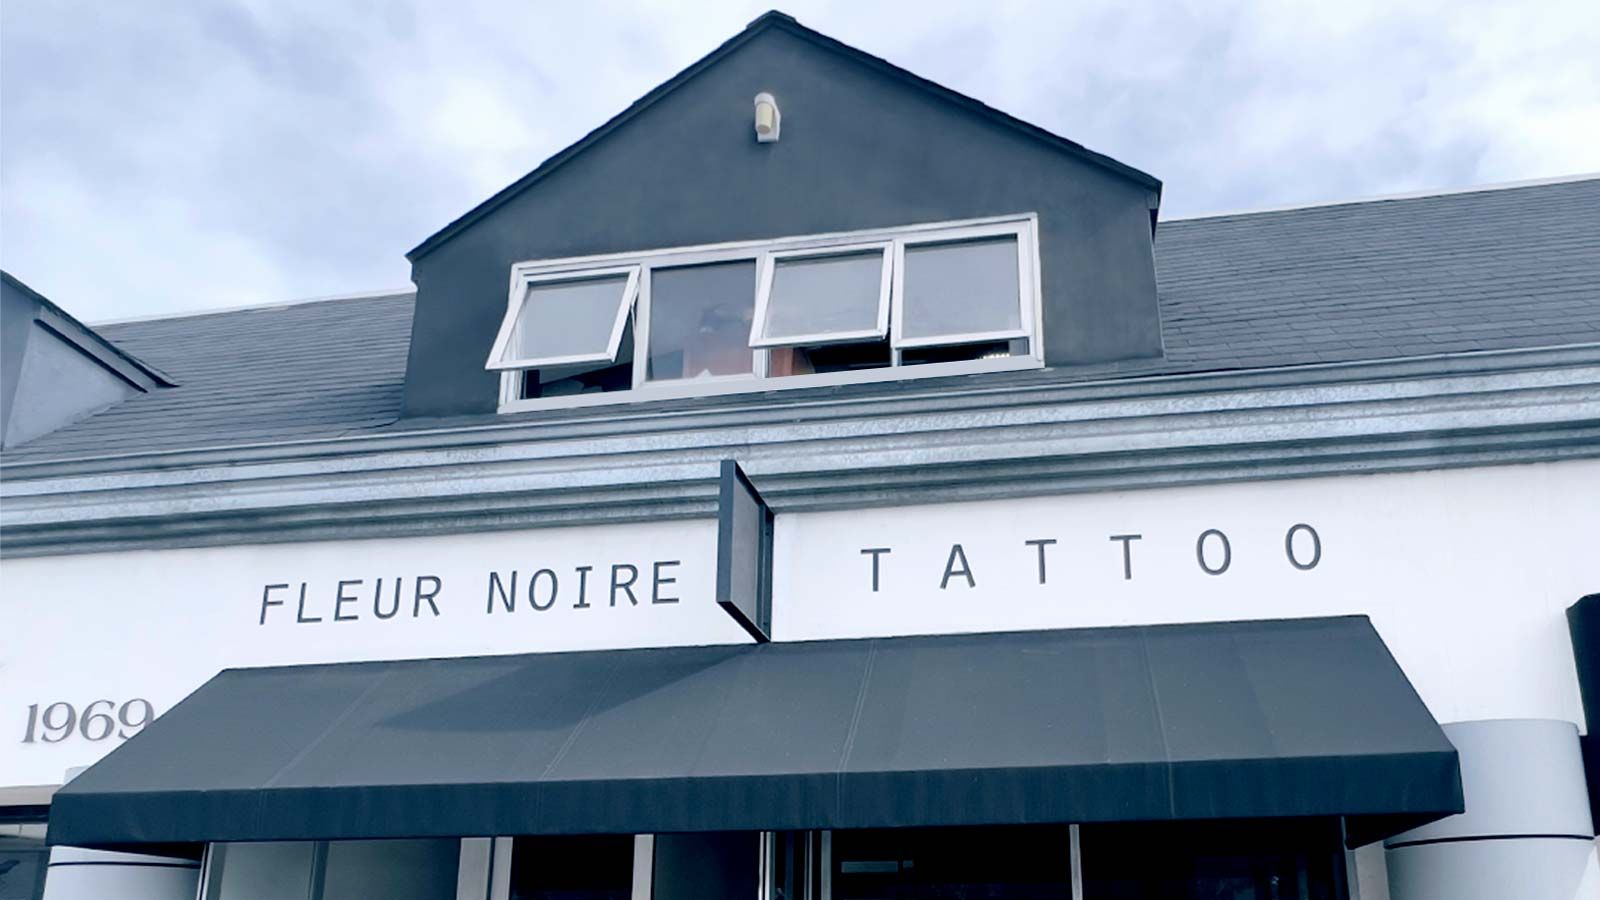 Fleur Noire Tattoo vinyl lettering applied to the building